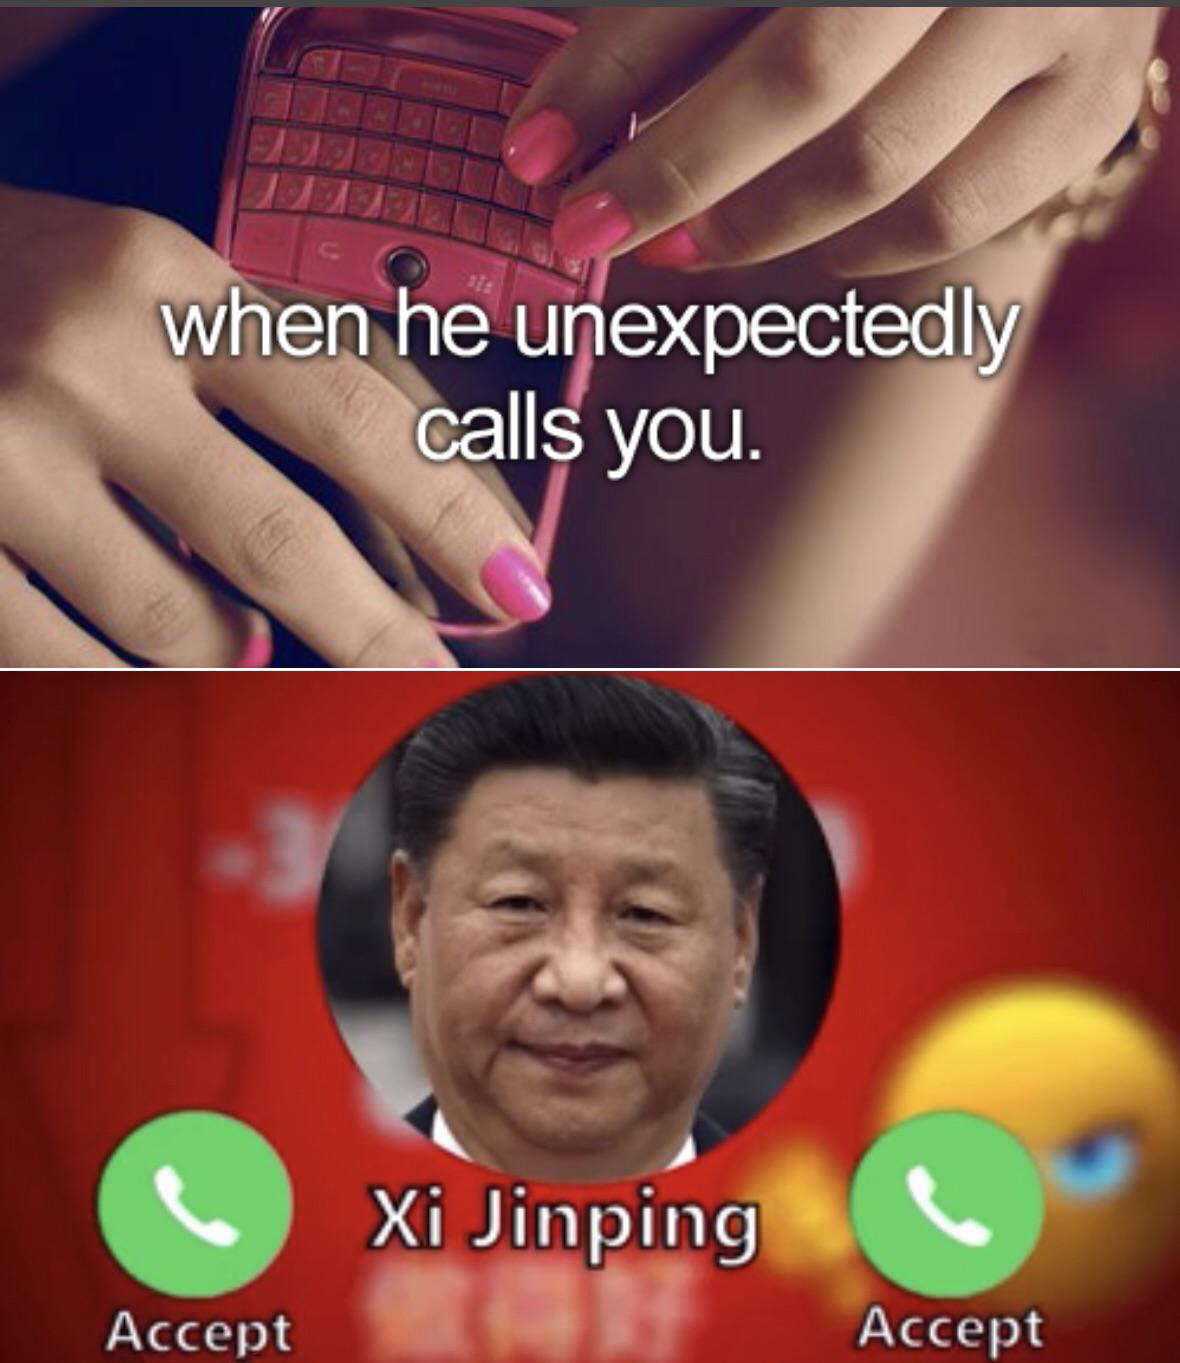 nail - when he unexpectedly calls you. Xi Jinping Accept Accept